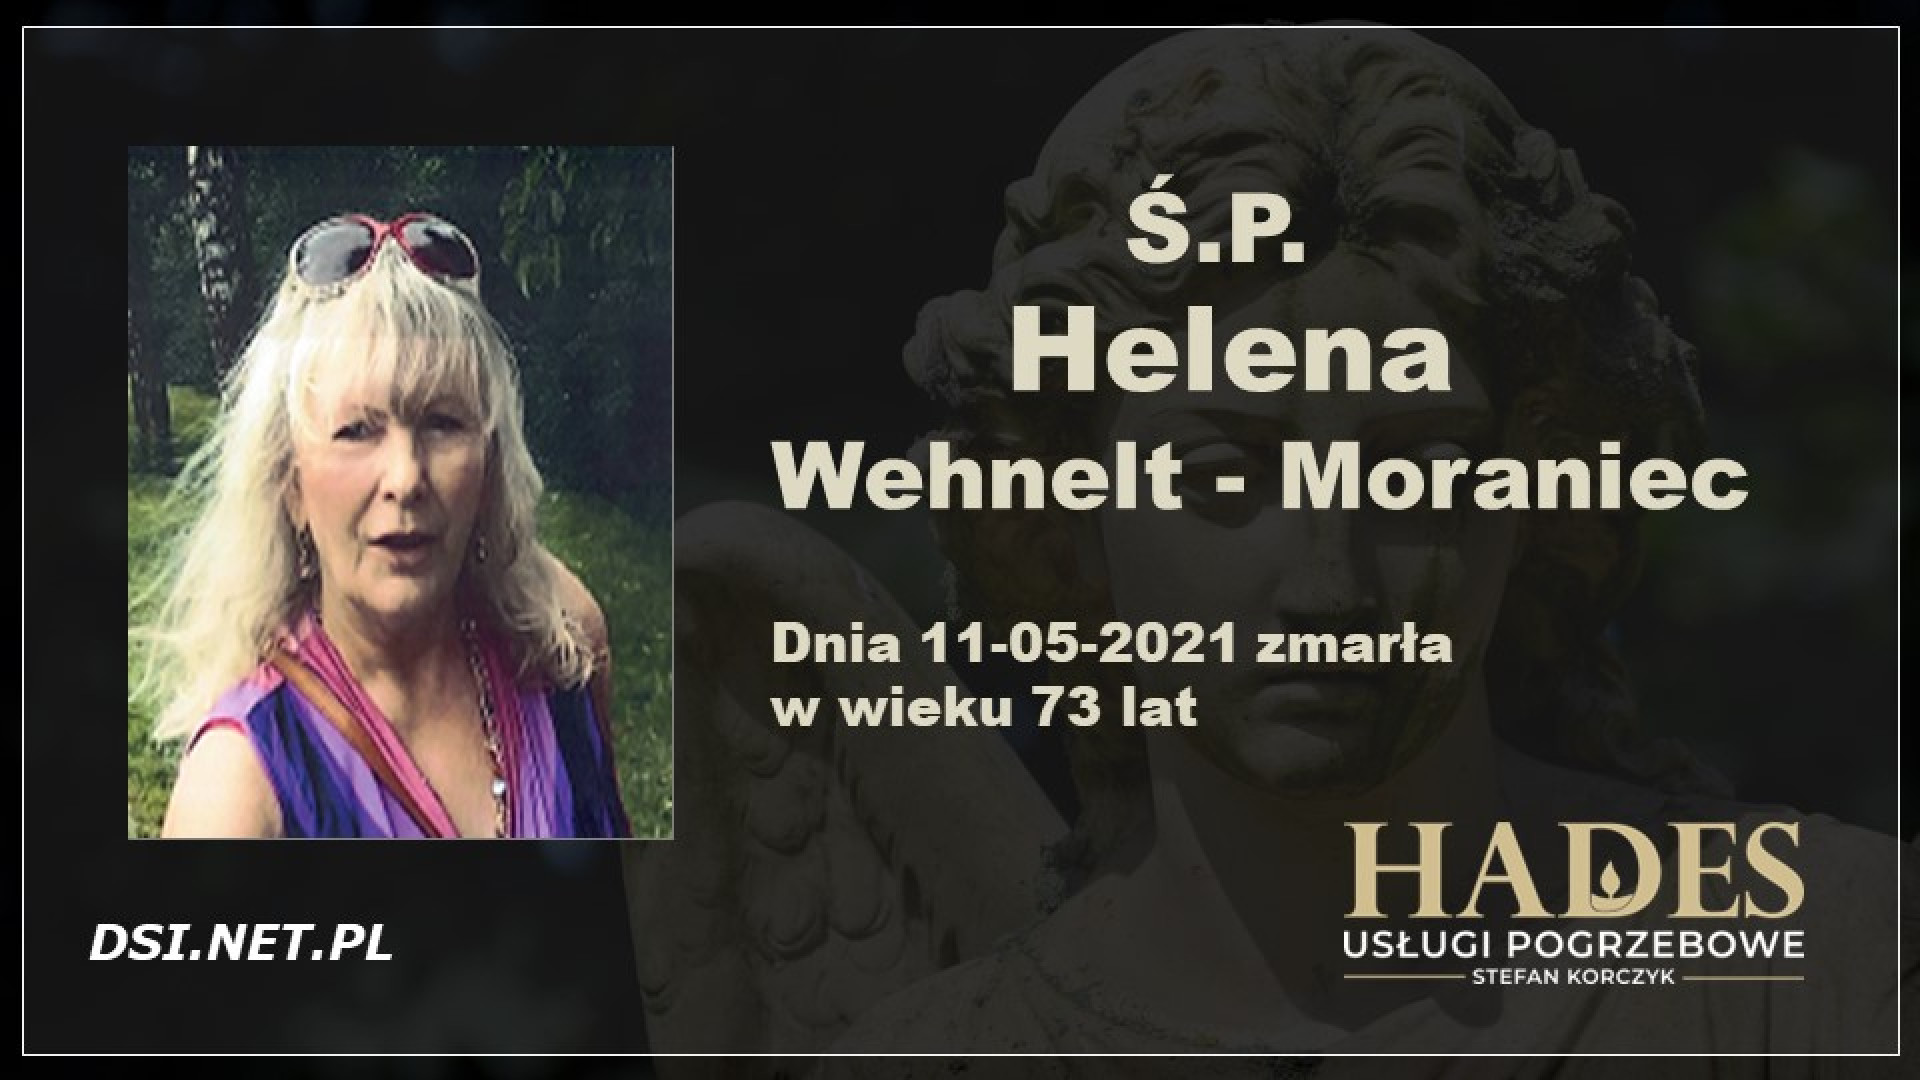 Ś.P. Helena Wehnelt-Moraniec